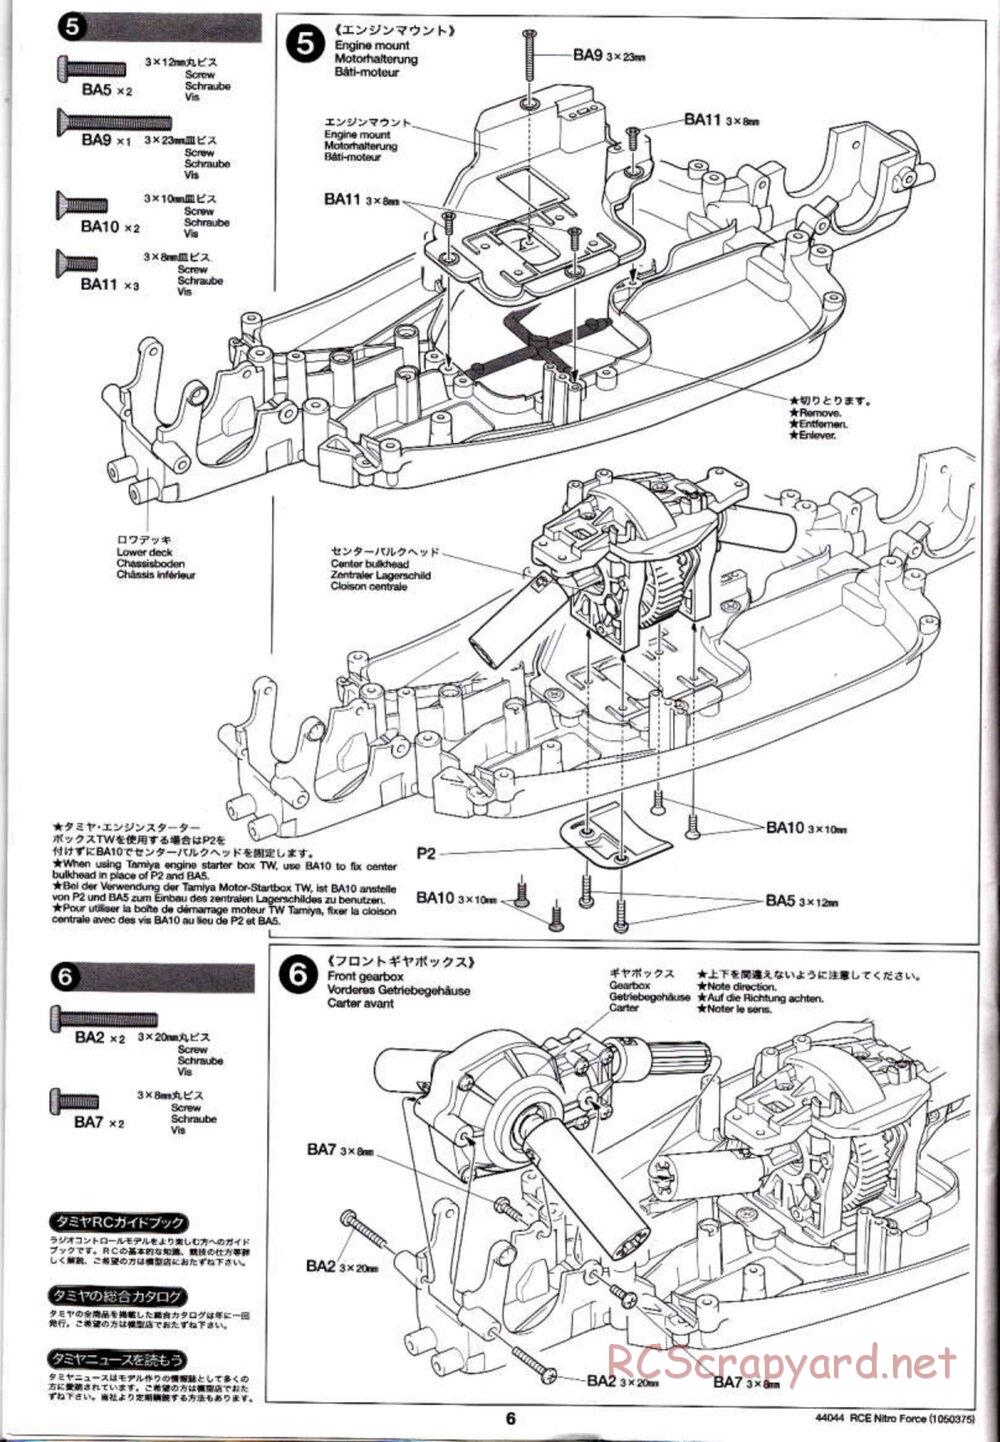 Tamiya - Nitro Force - NDF-01 Chassis - Manual - Page 6